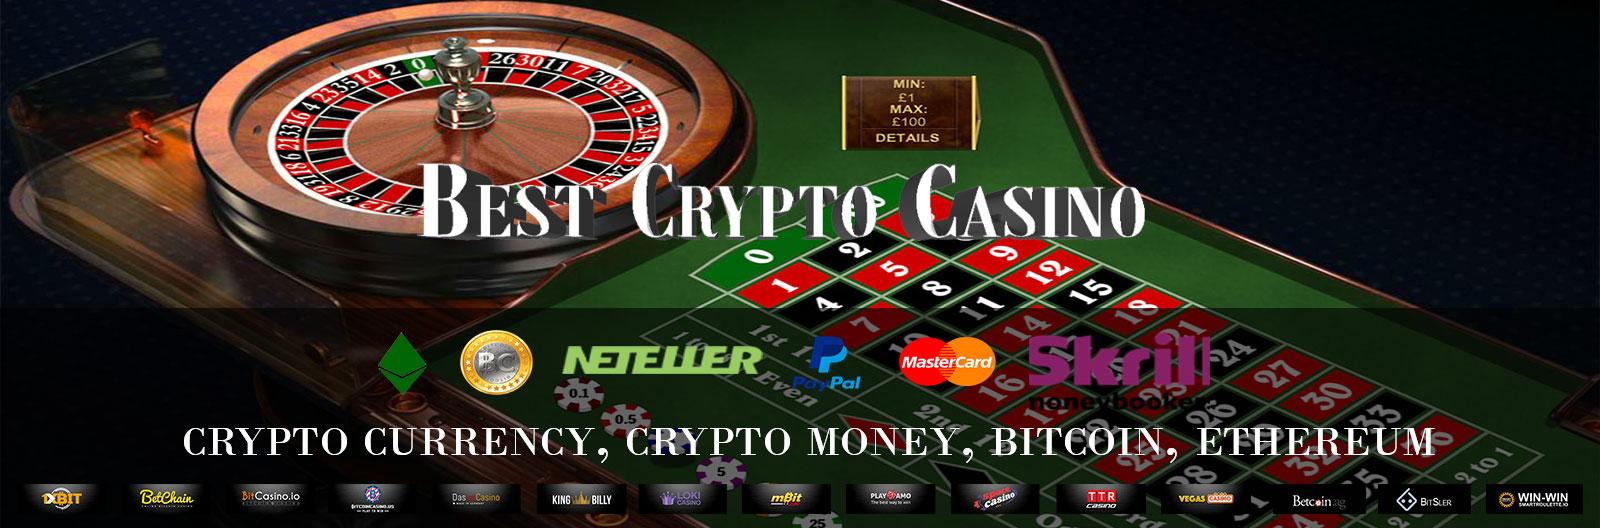 Spin bitcoin casino rating